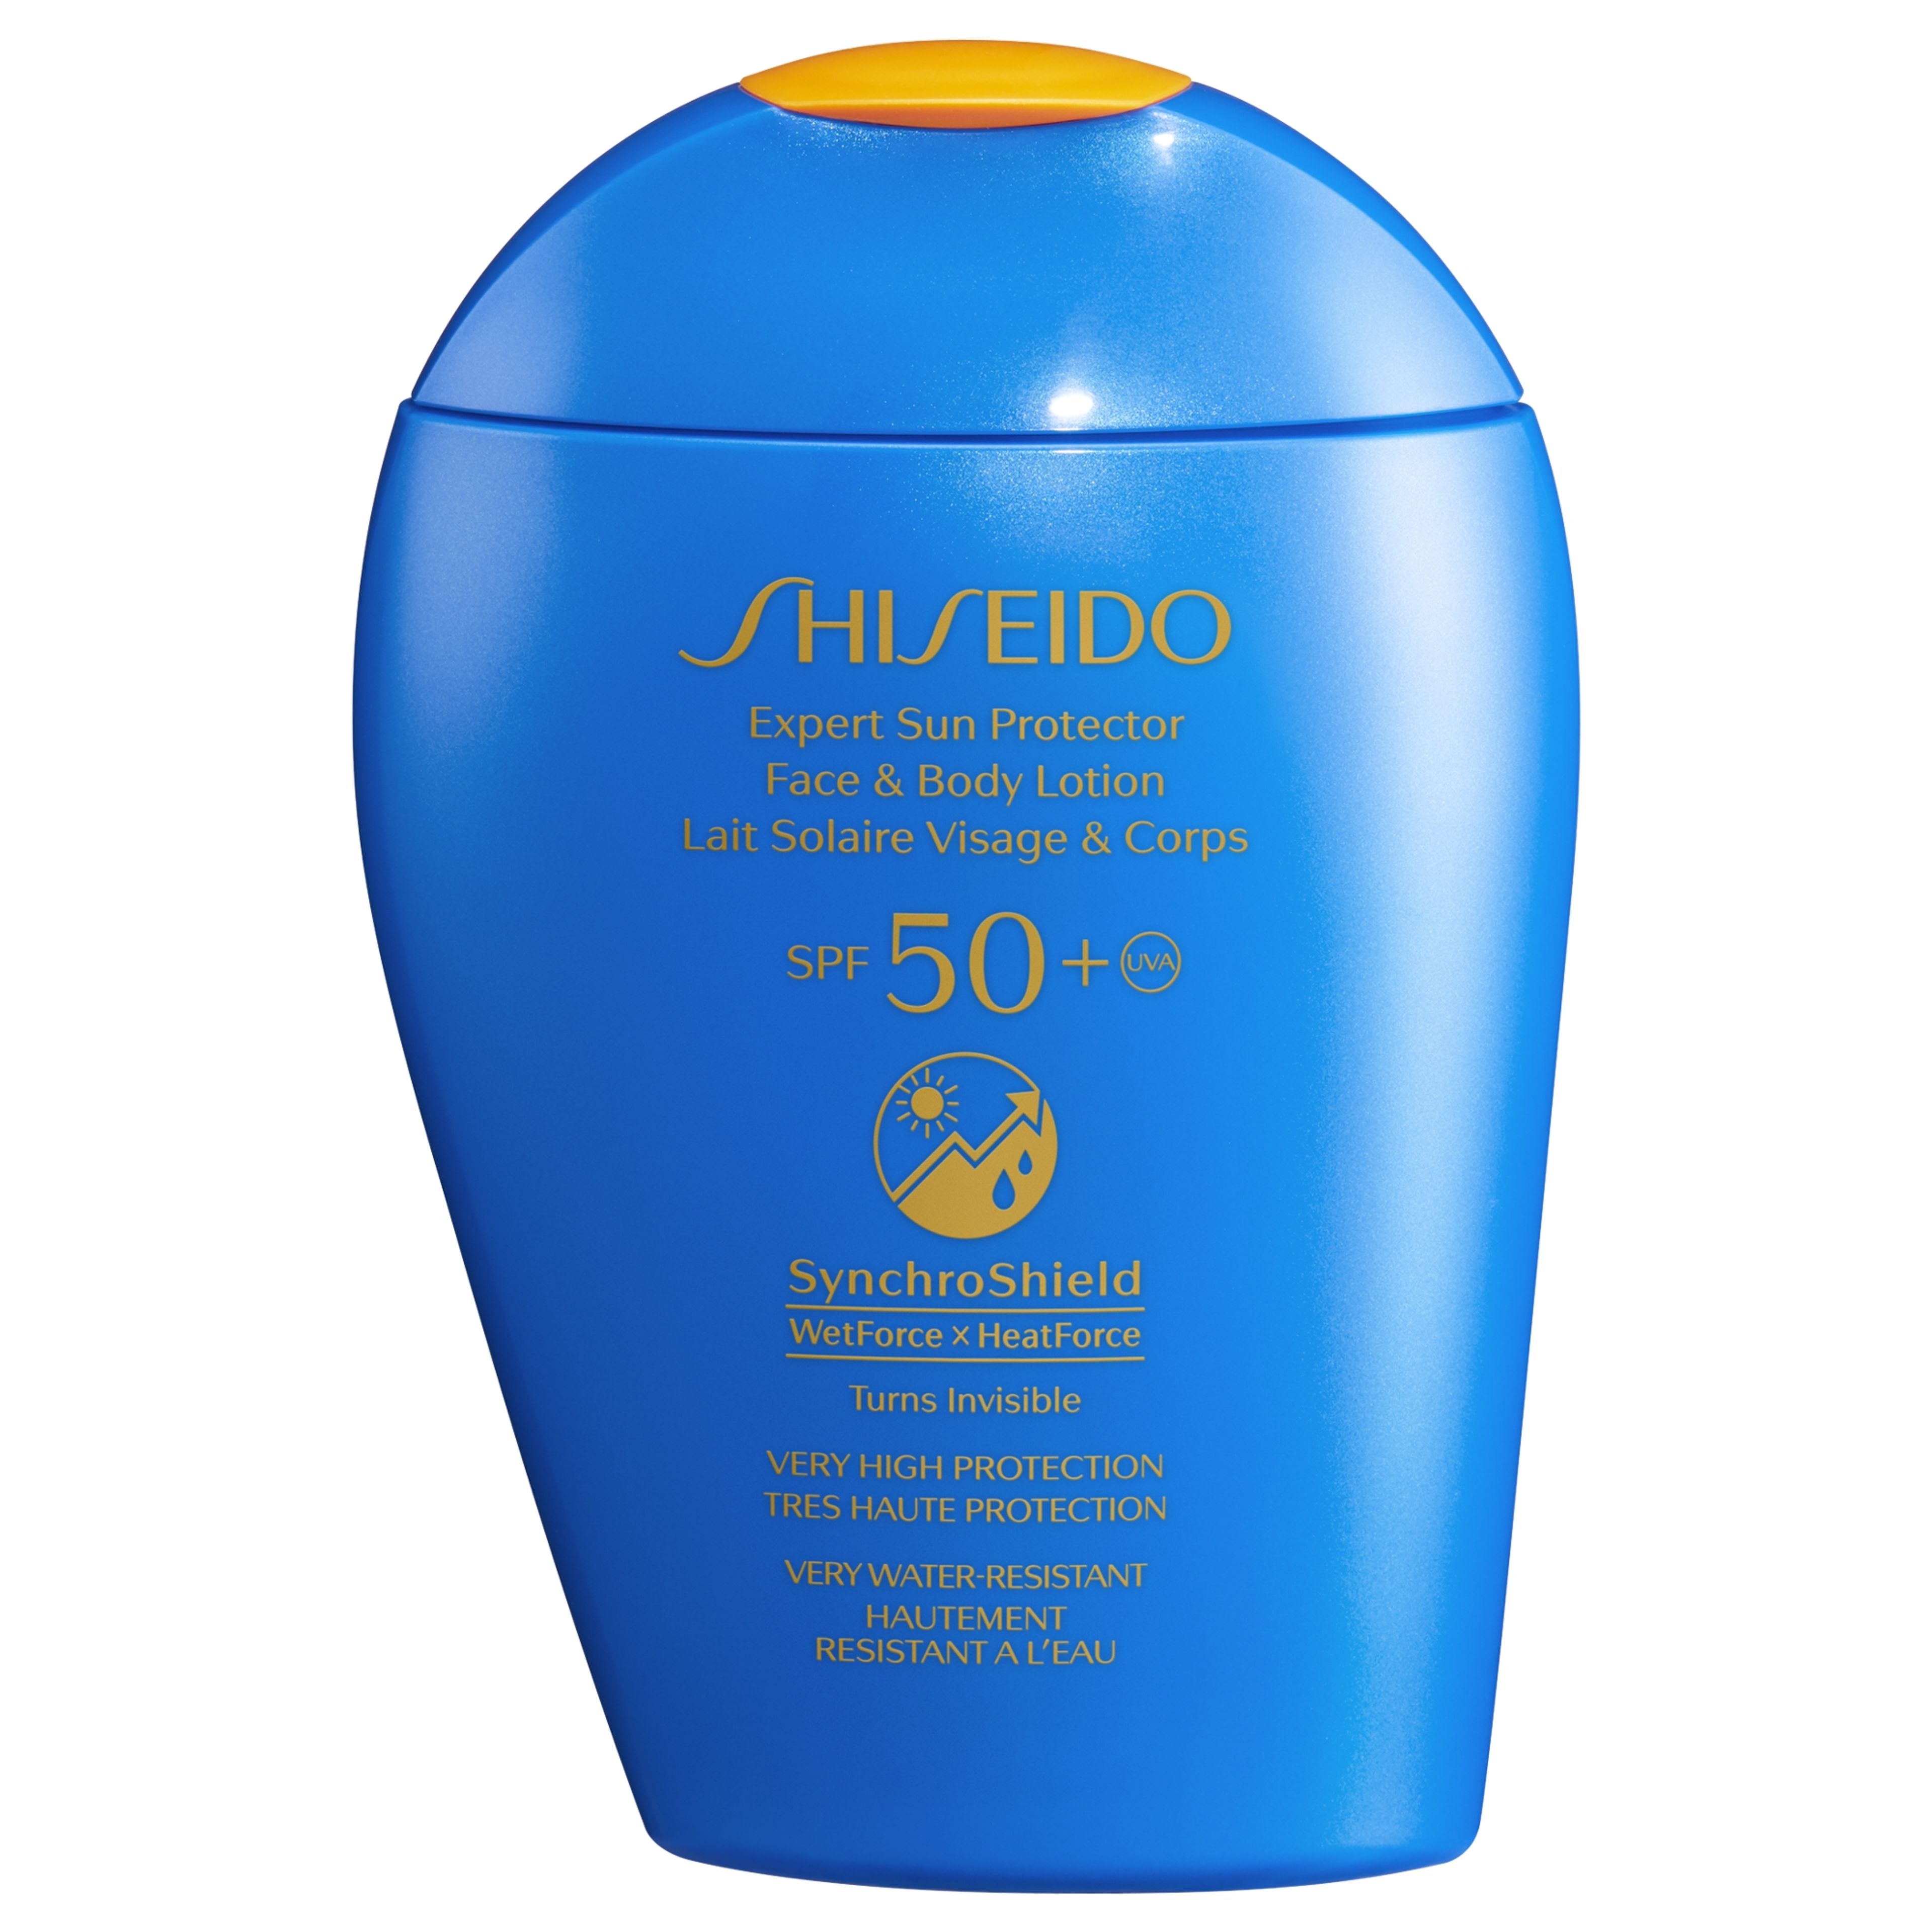 Shiseido Expert Sun Protector
face And Body Lotion 
spf50+ 1